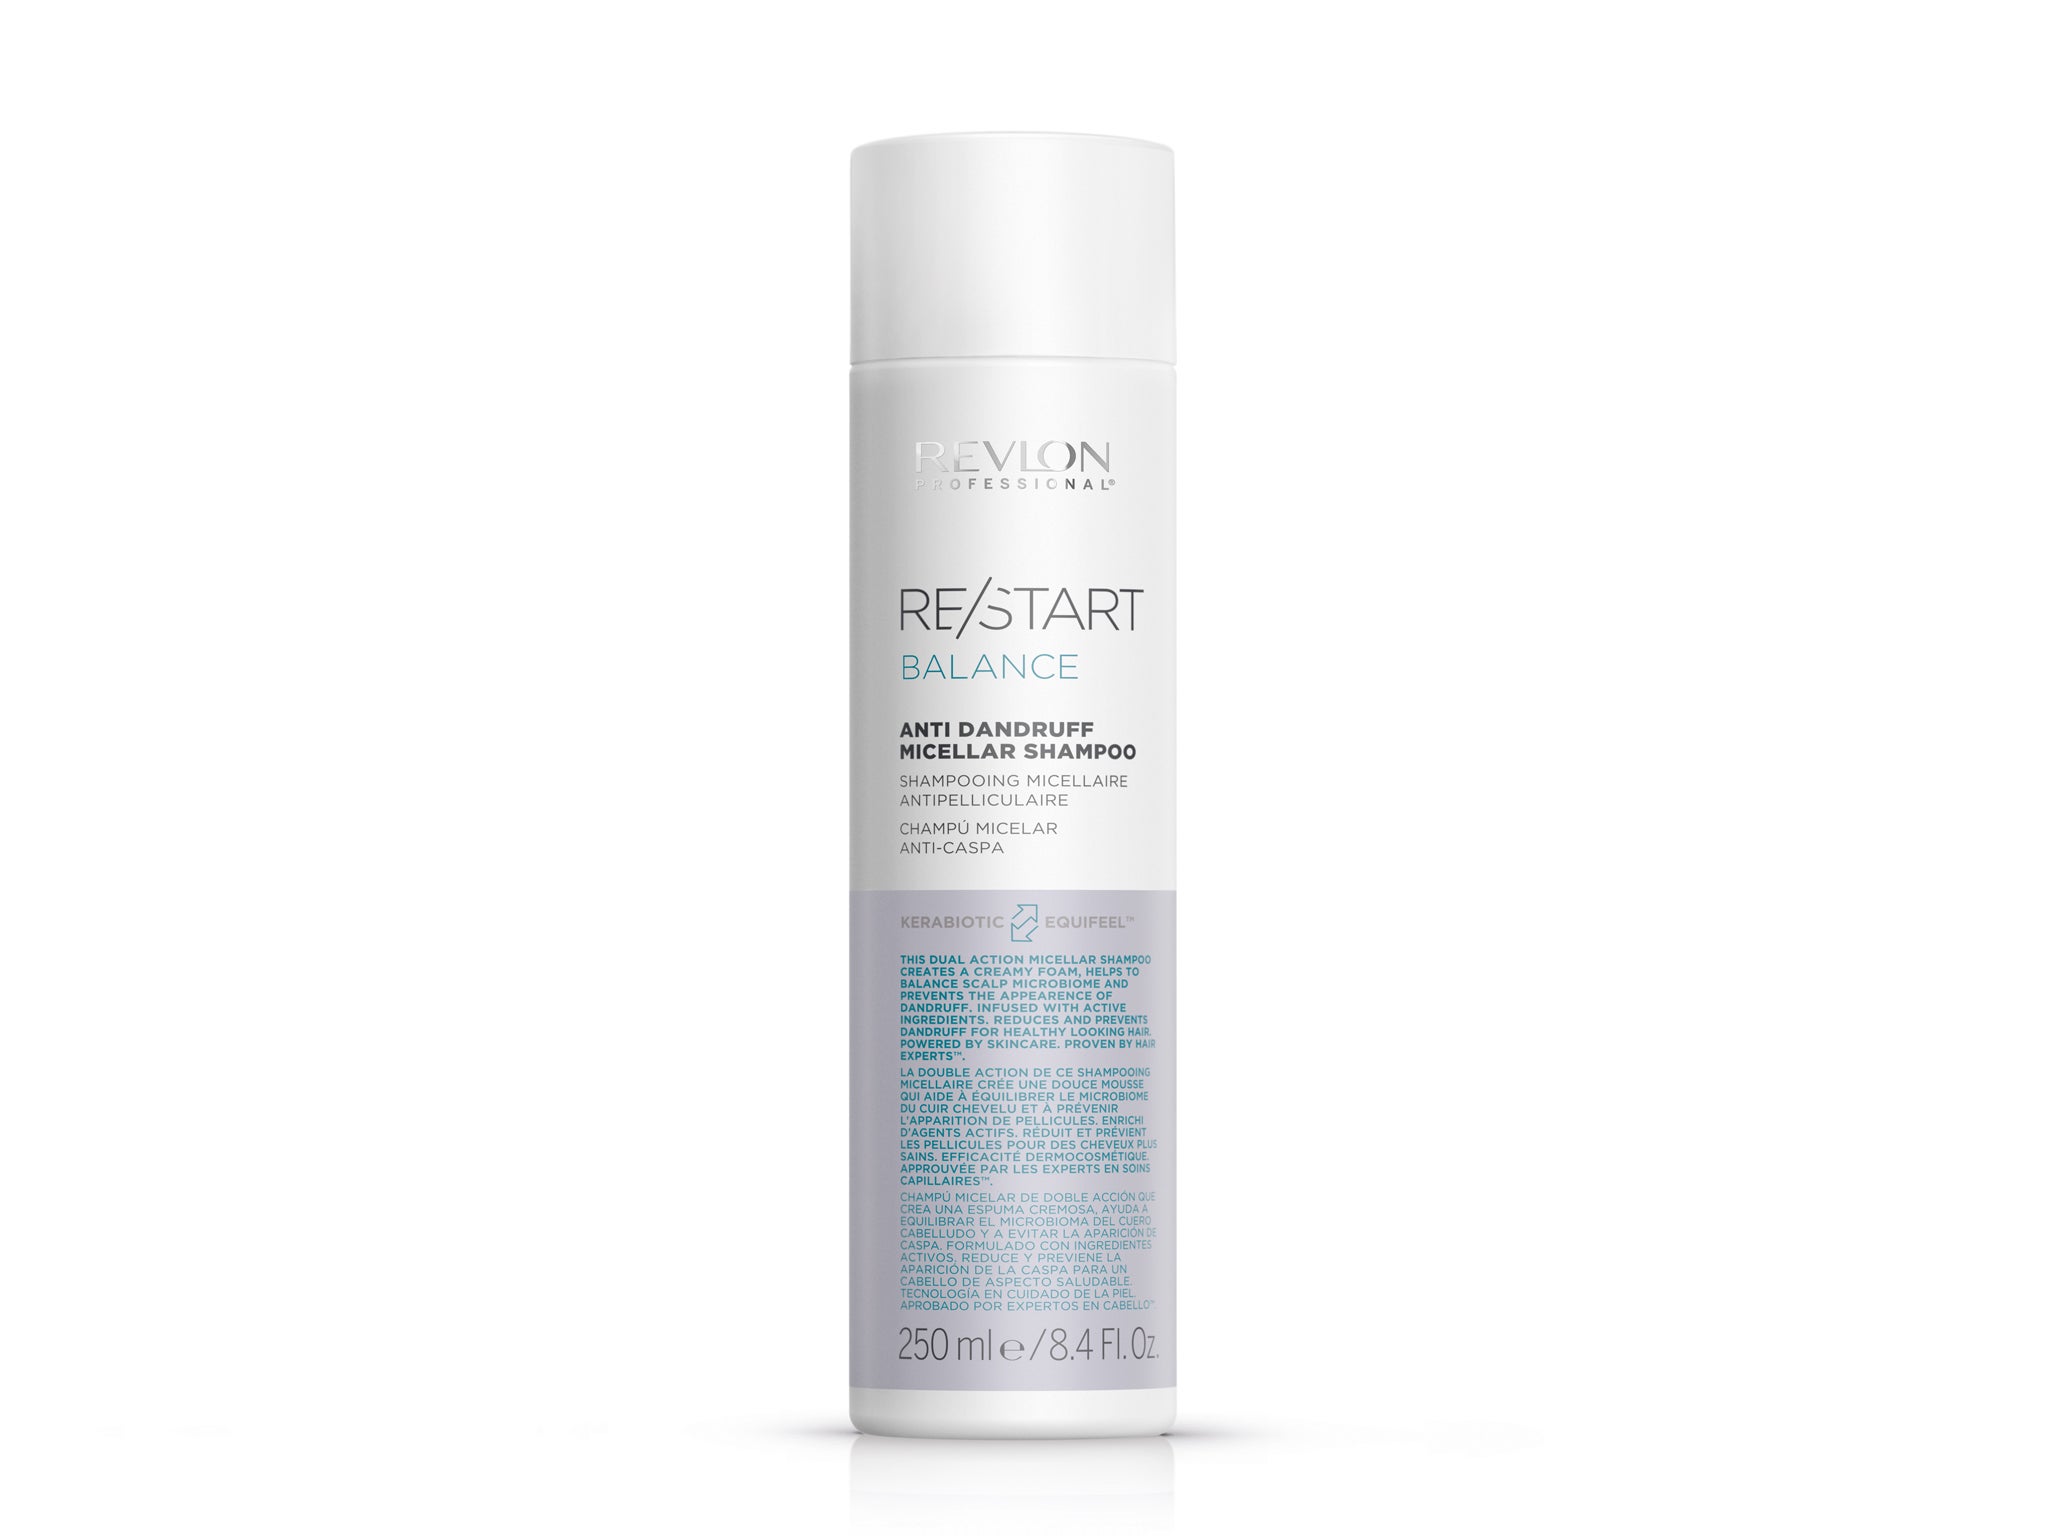 Revlon re-start balance anti dandruff micellar shampoo.jpg